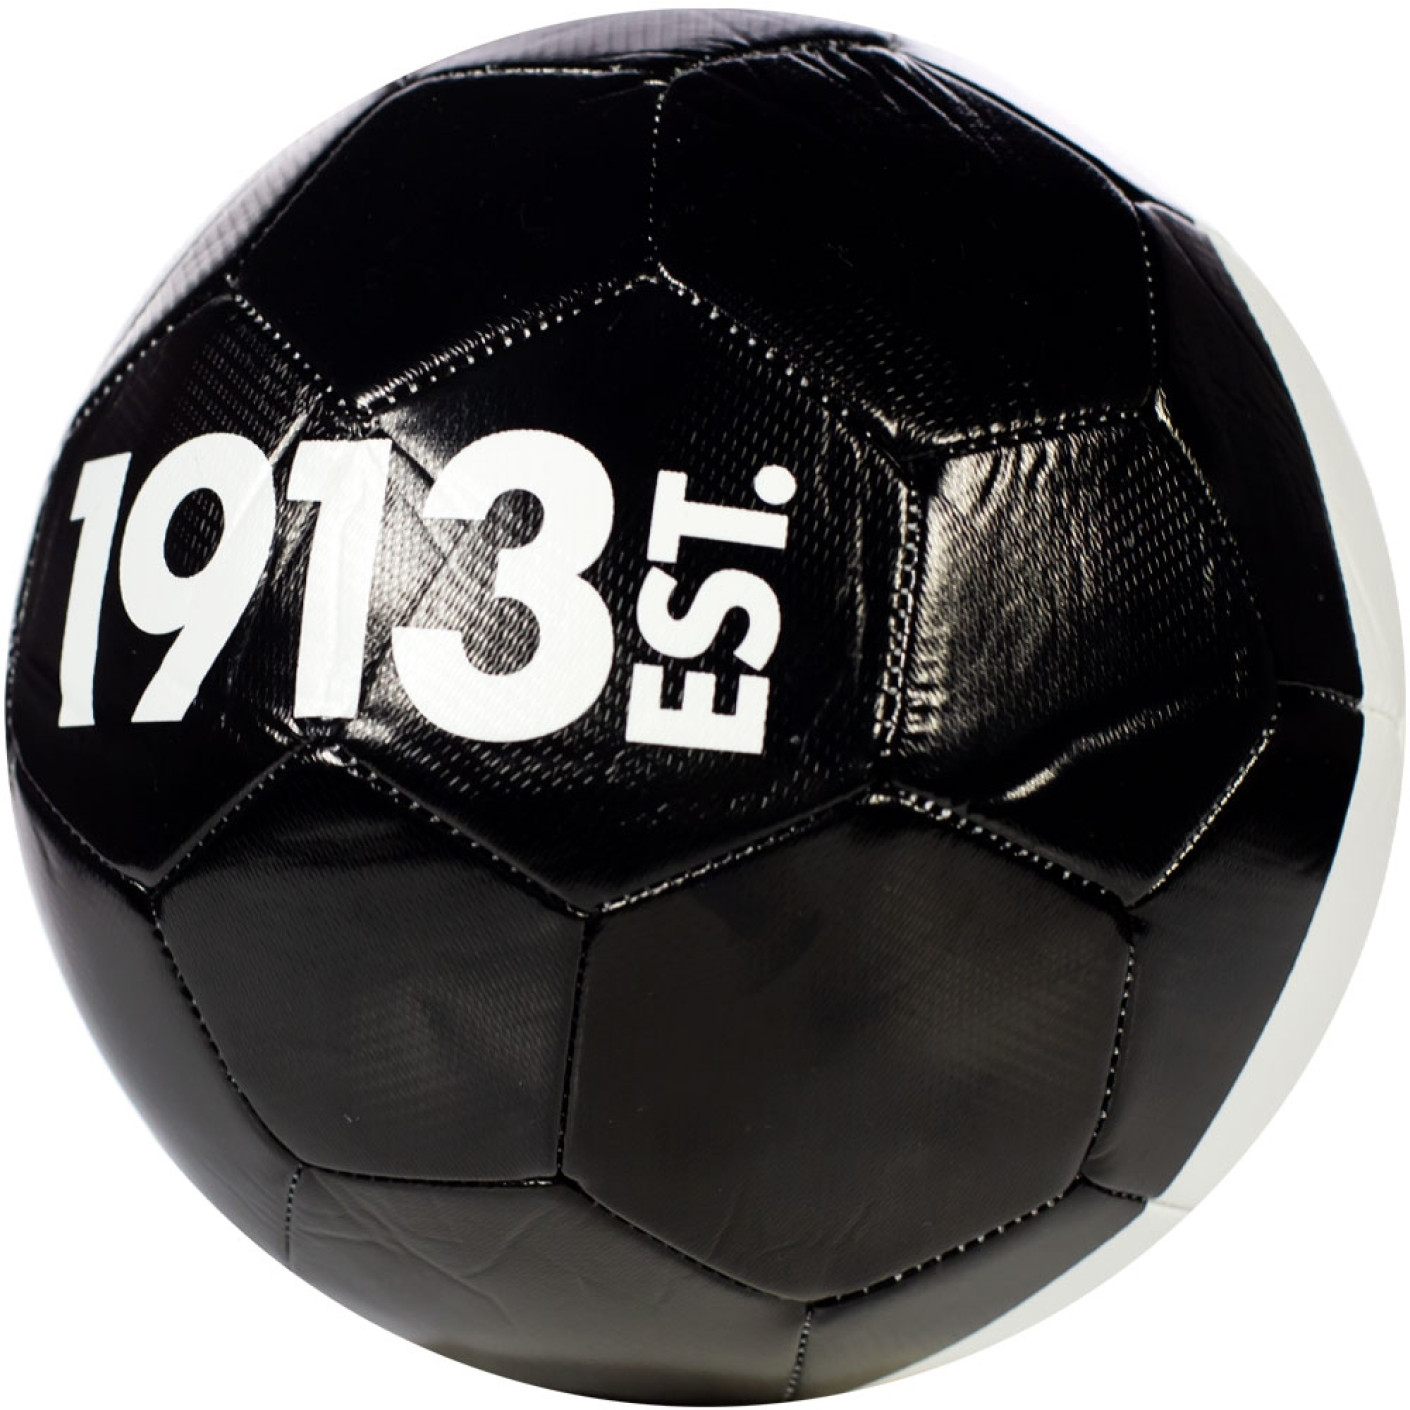 1913 bal zwart-wit